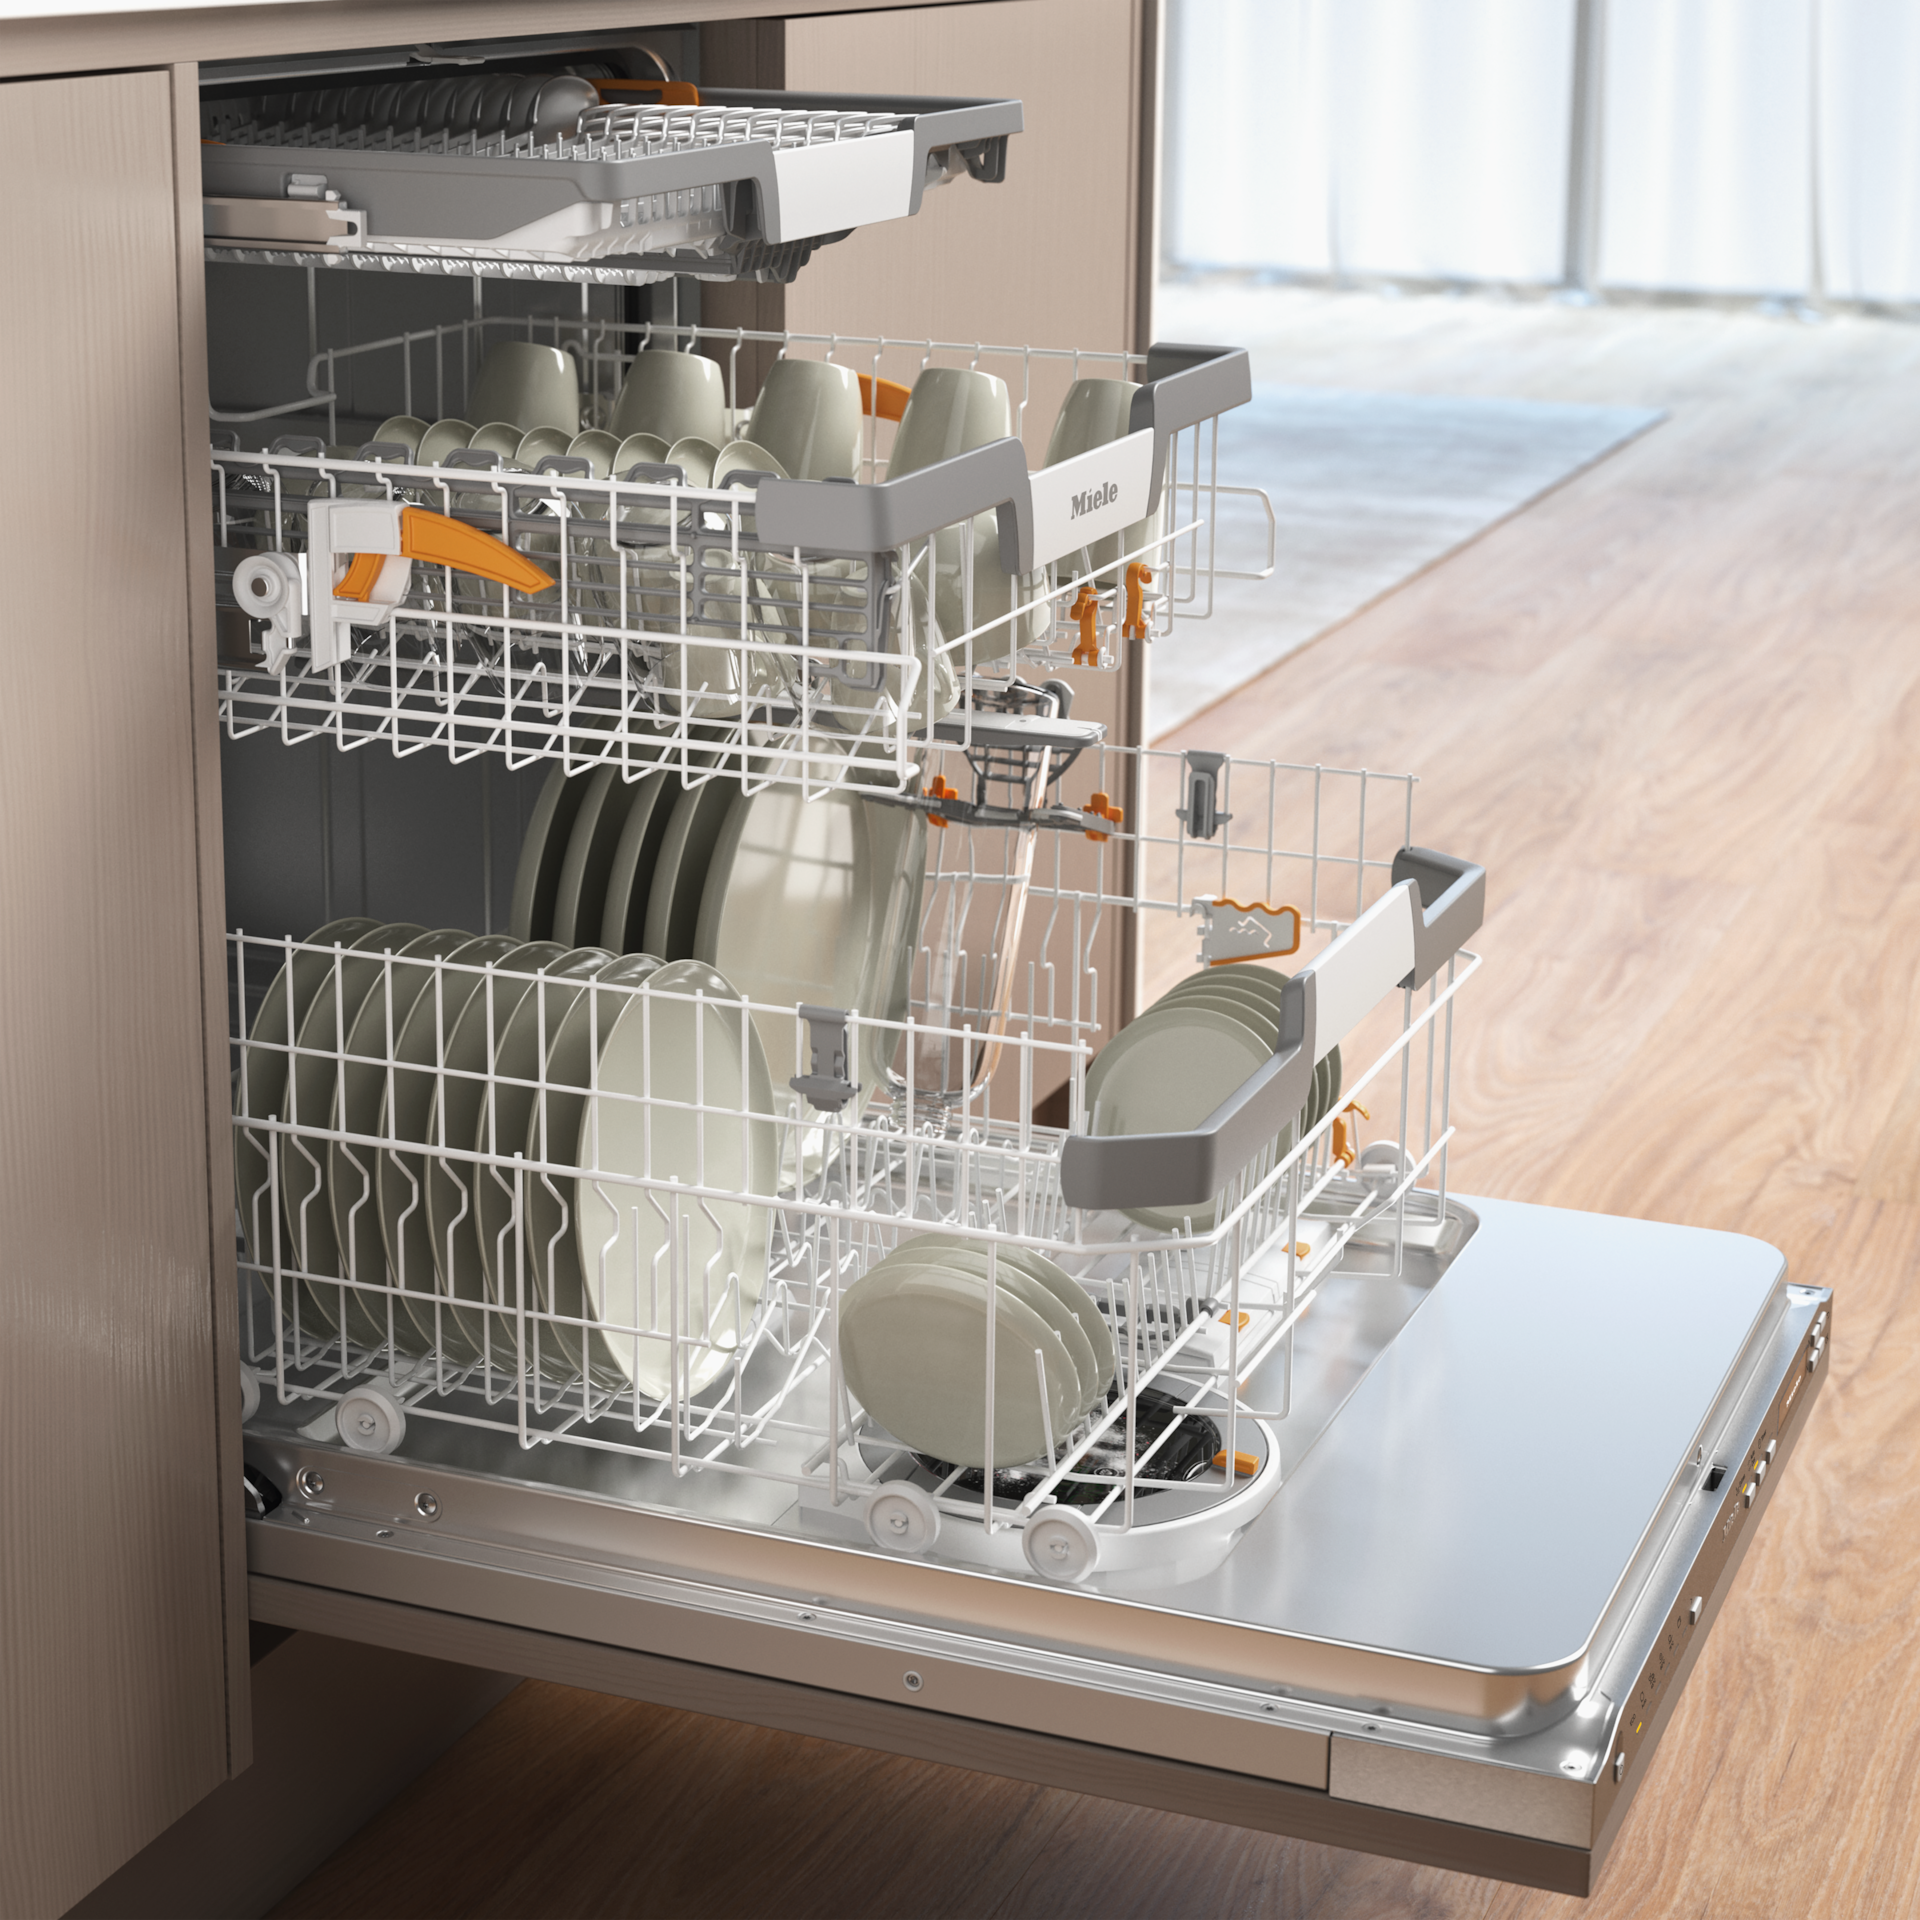 Dishwashers - G 7185 SCVi XXL AutoDos Stainless Steel. - 3